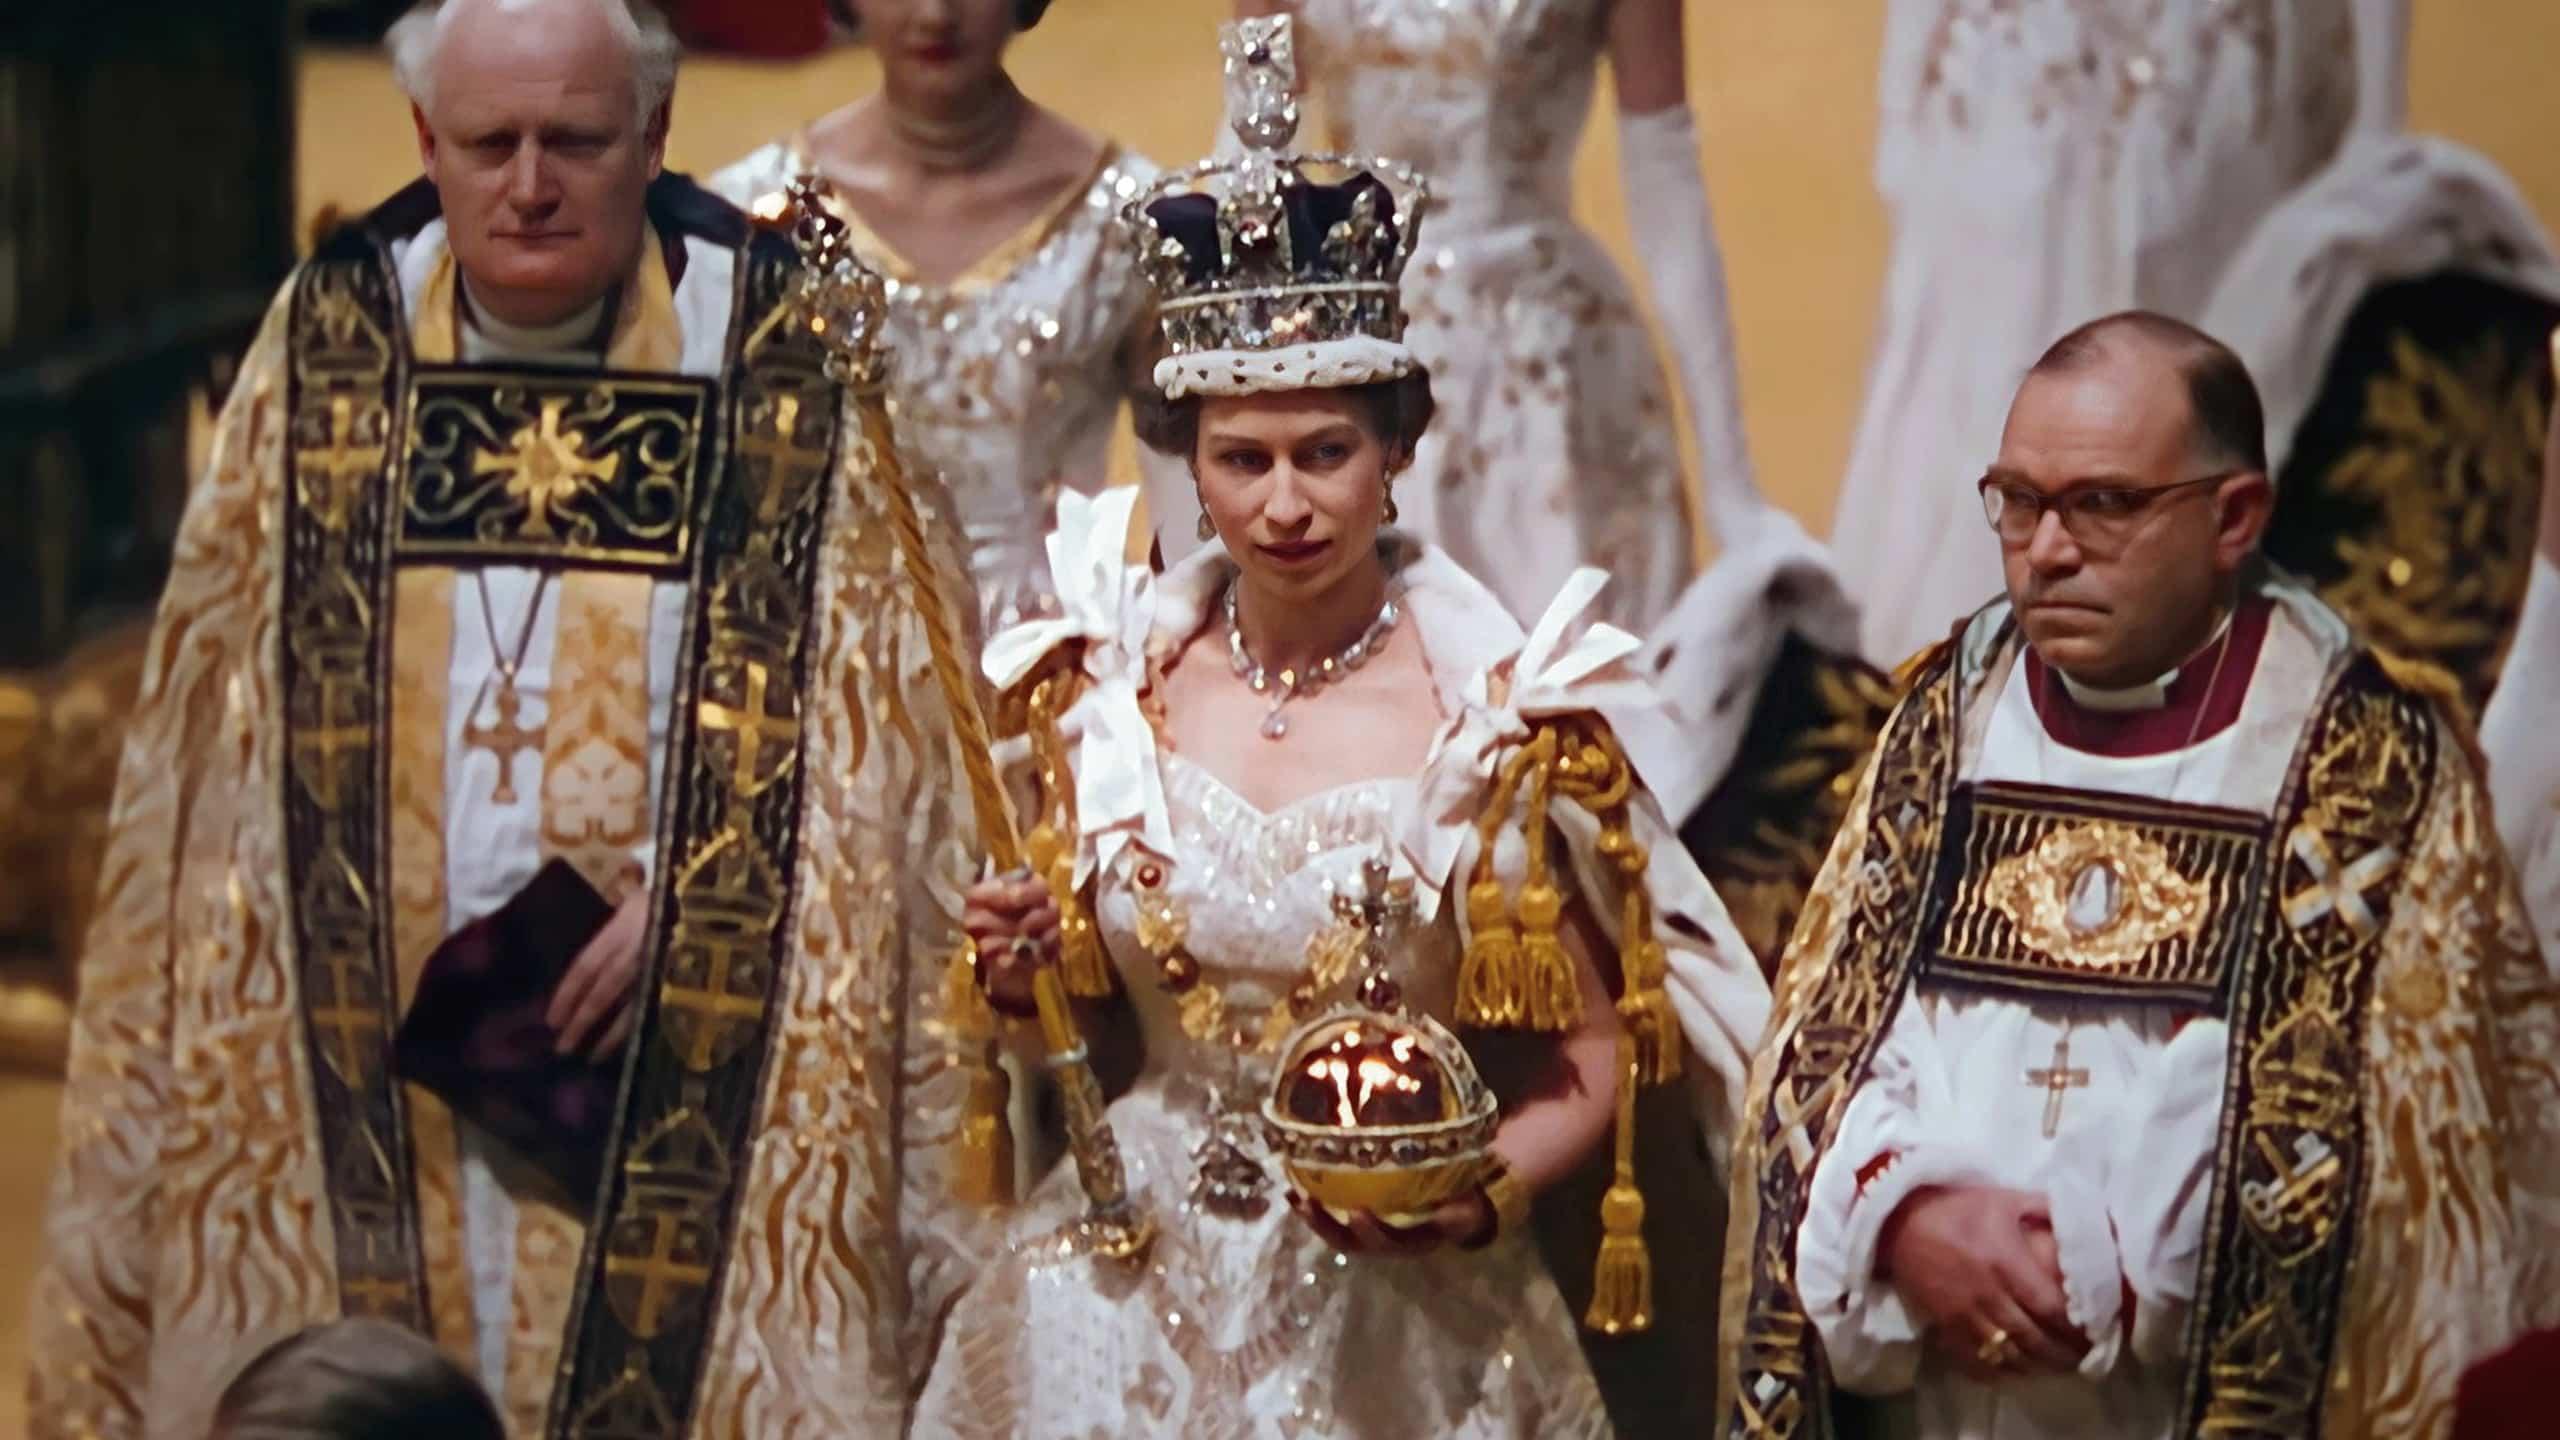 Élizabeth II, Une vie de reine